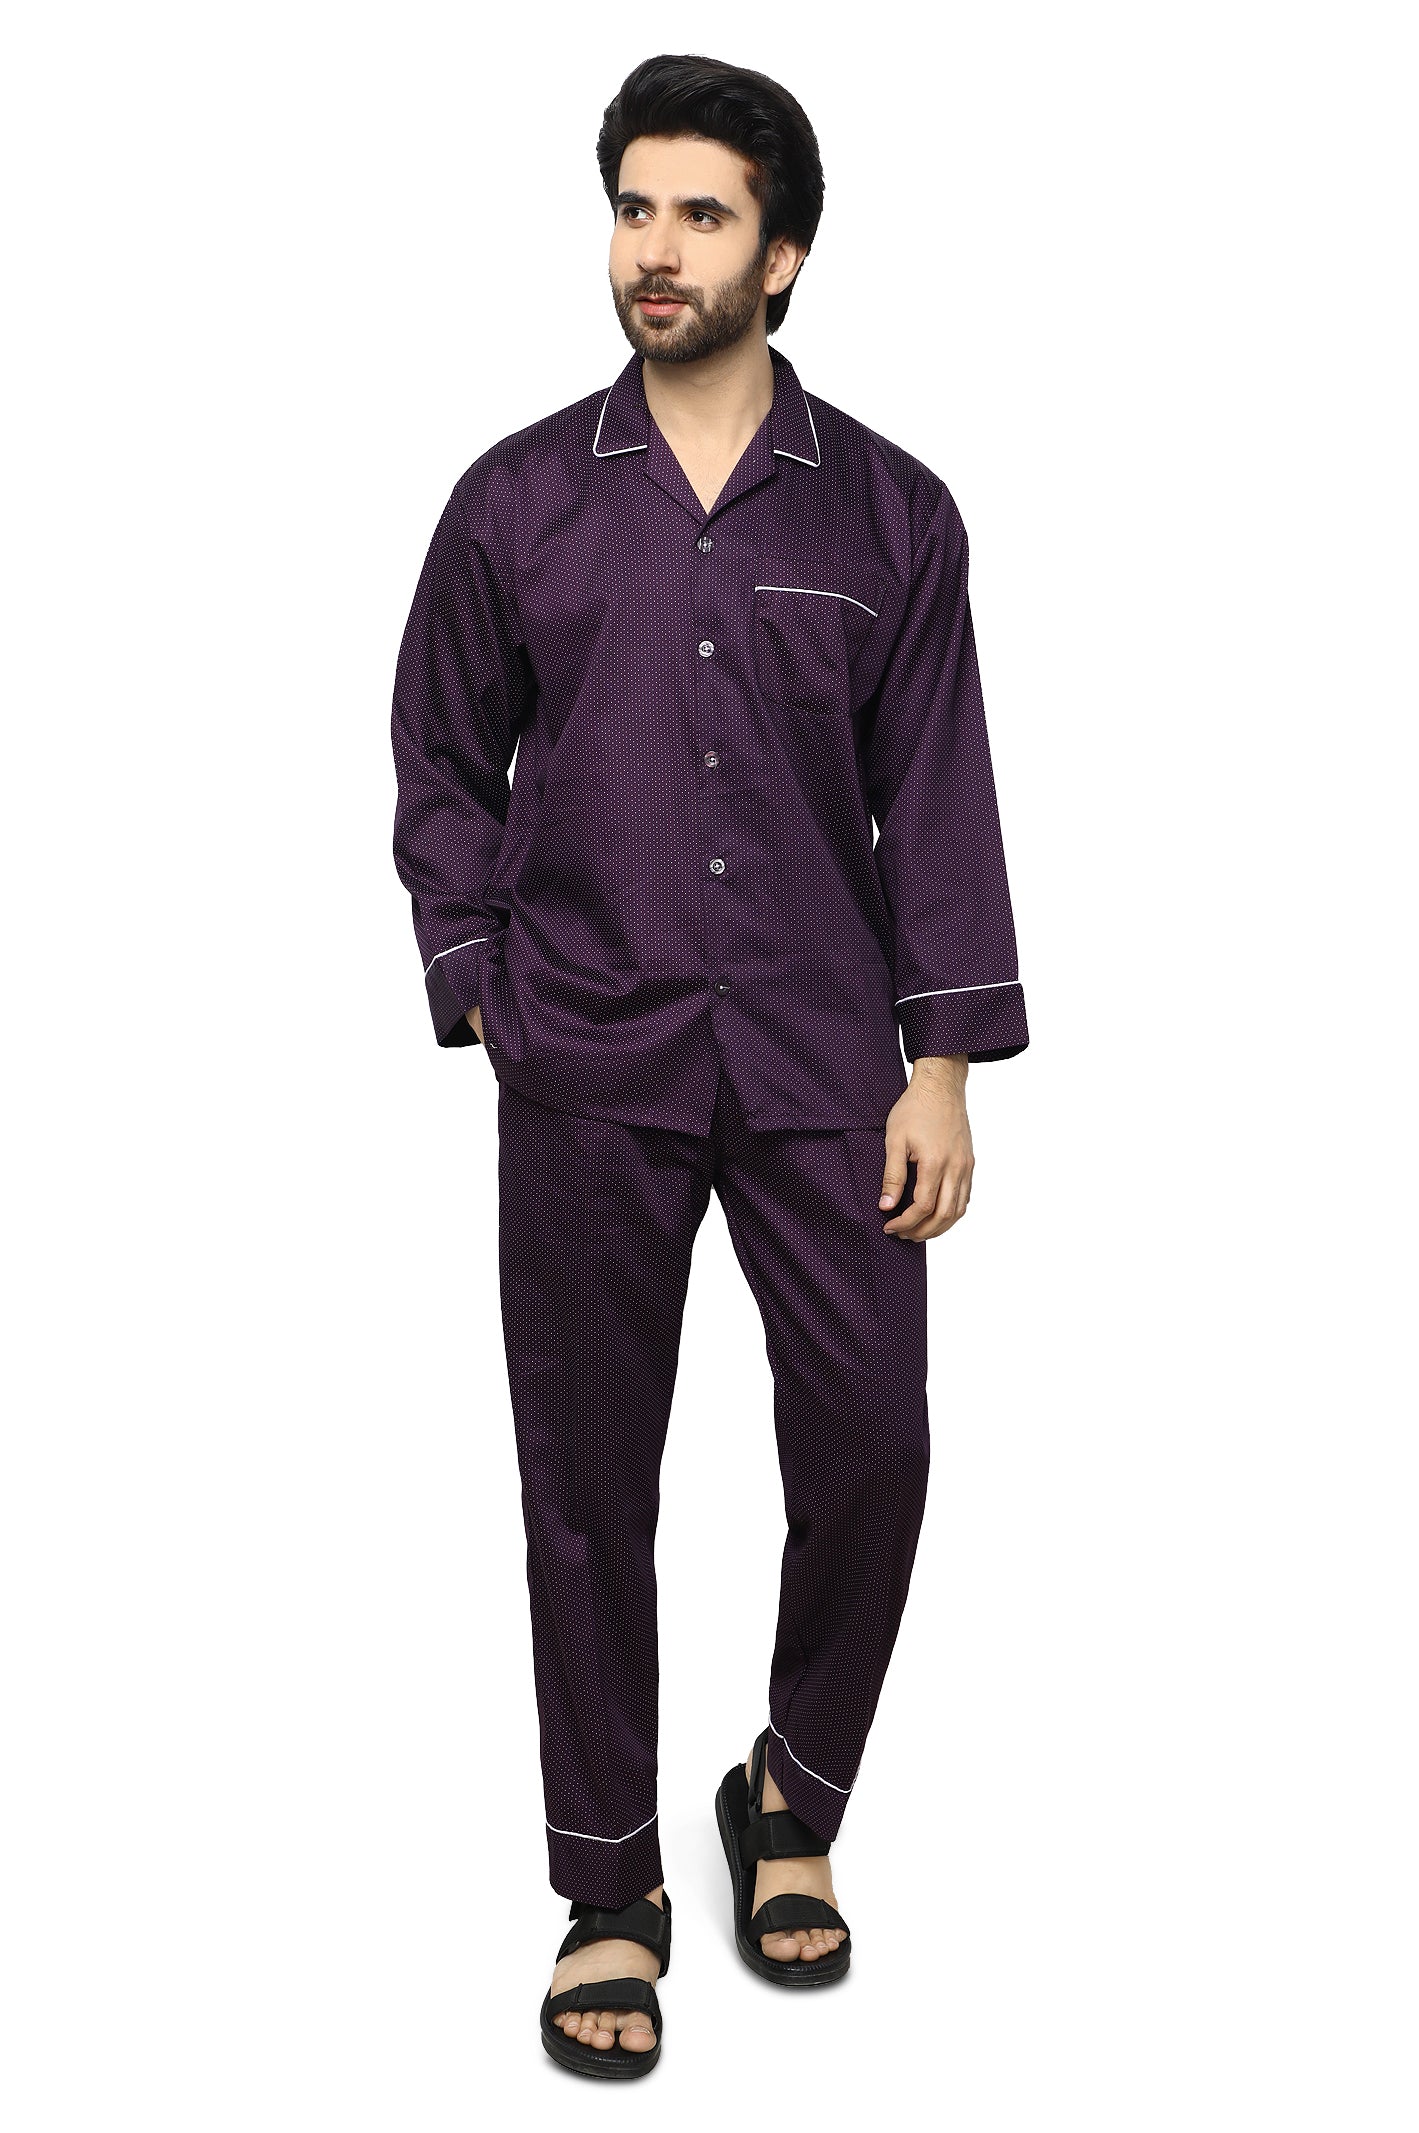 Diner's Night Suit for Men SKU: FNS008-D-PURPLE - Diners